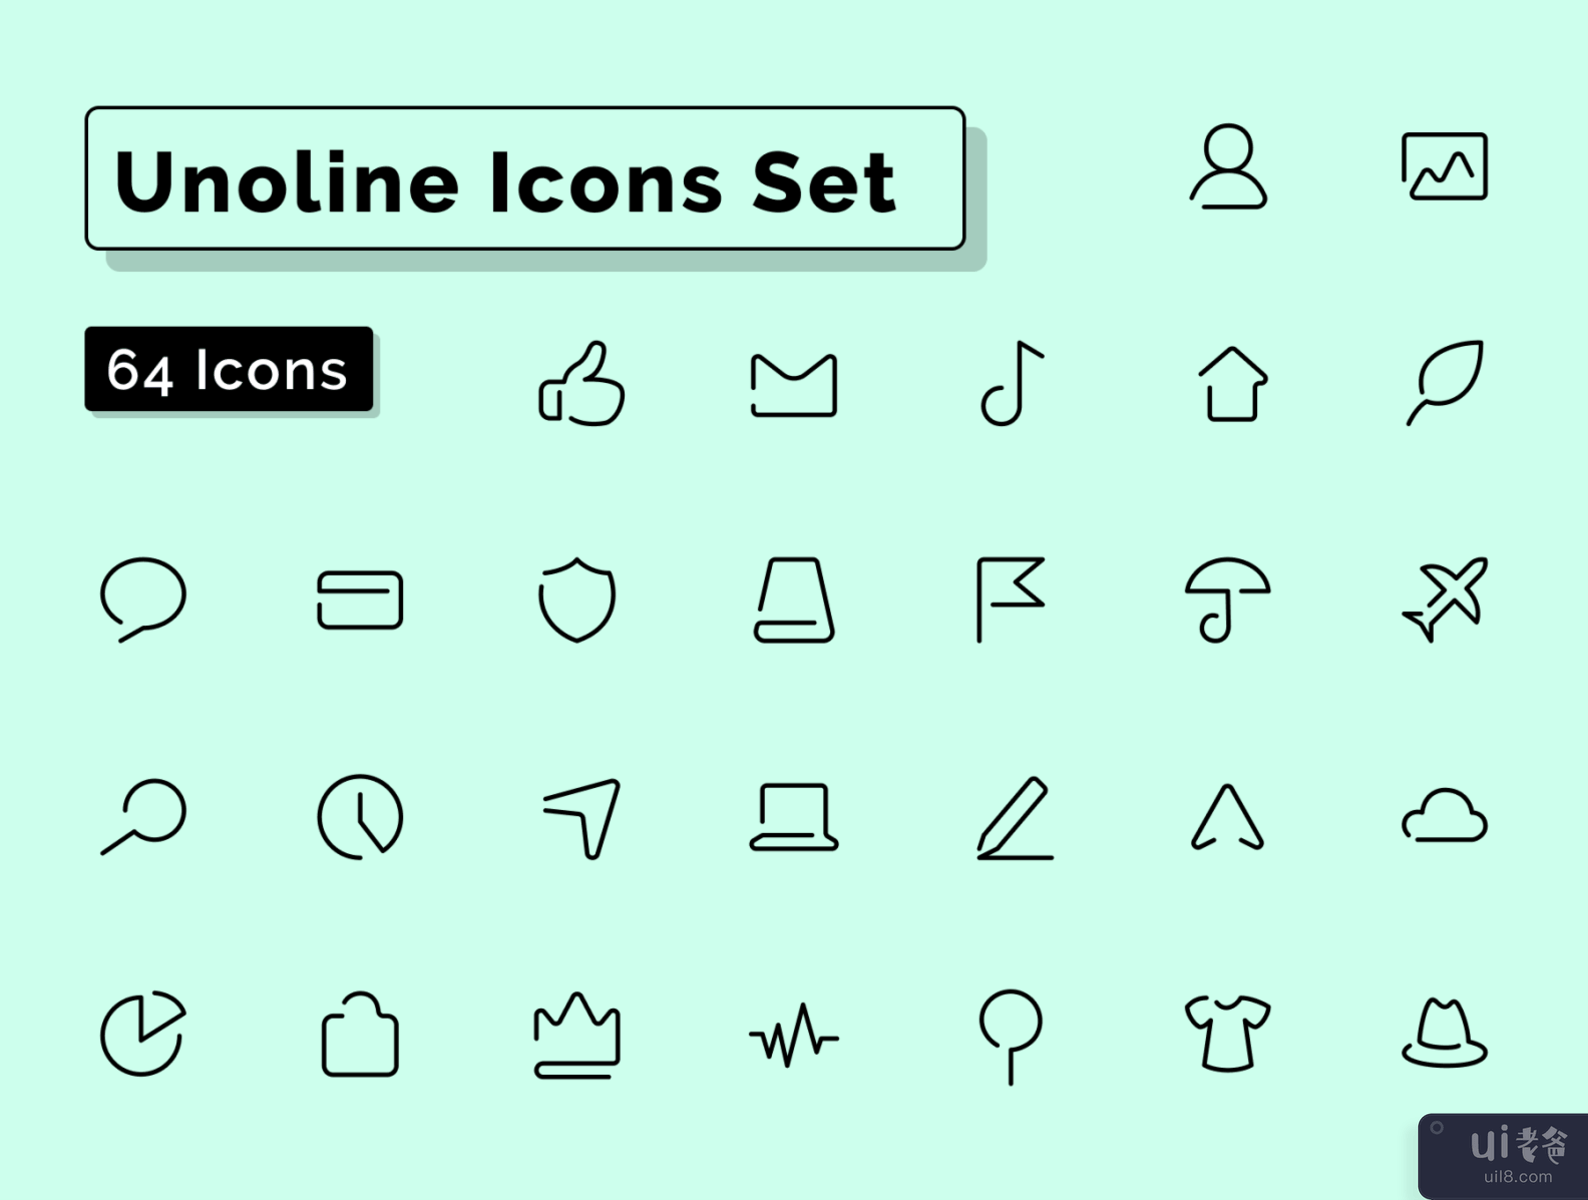 Unoline Icons Set - Complete